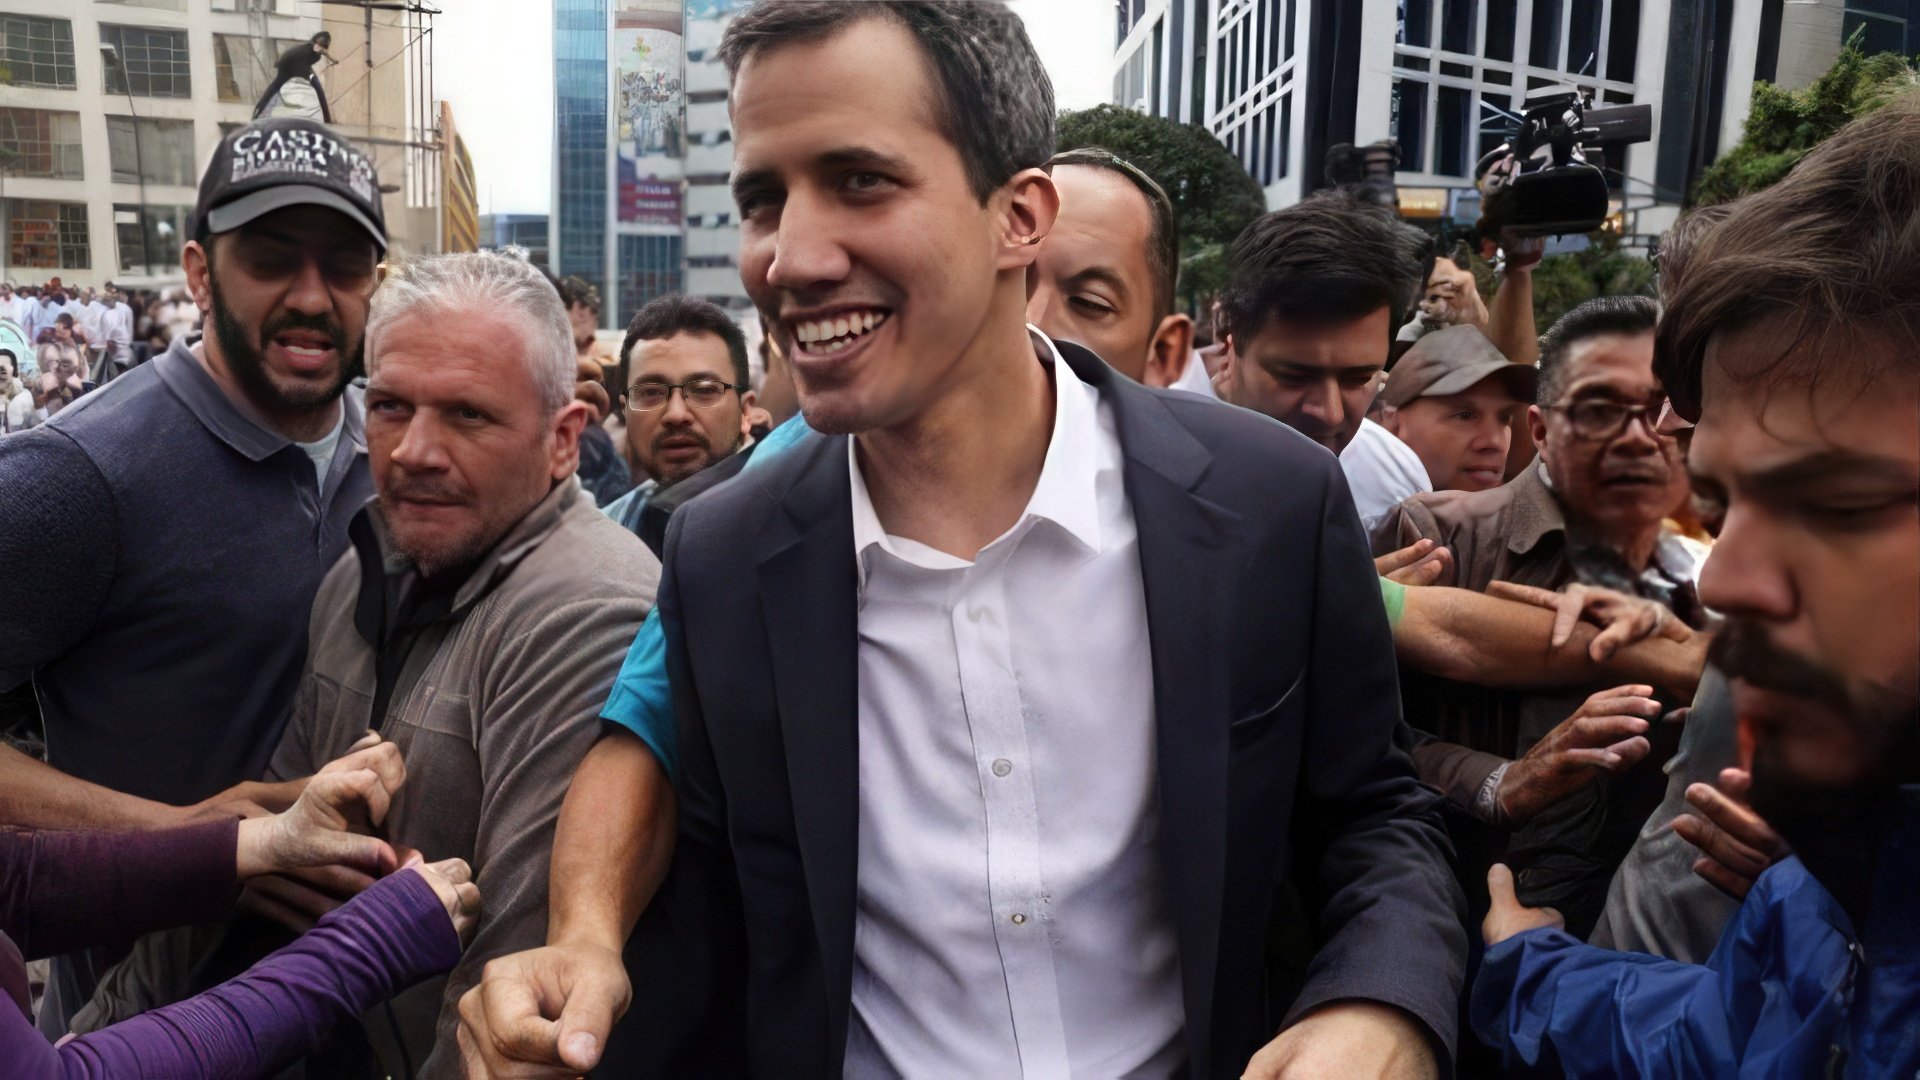 The leader of the Venezuelan opposition – Juan Guaido